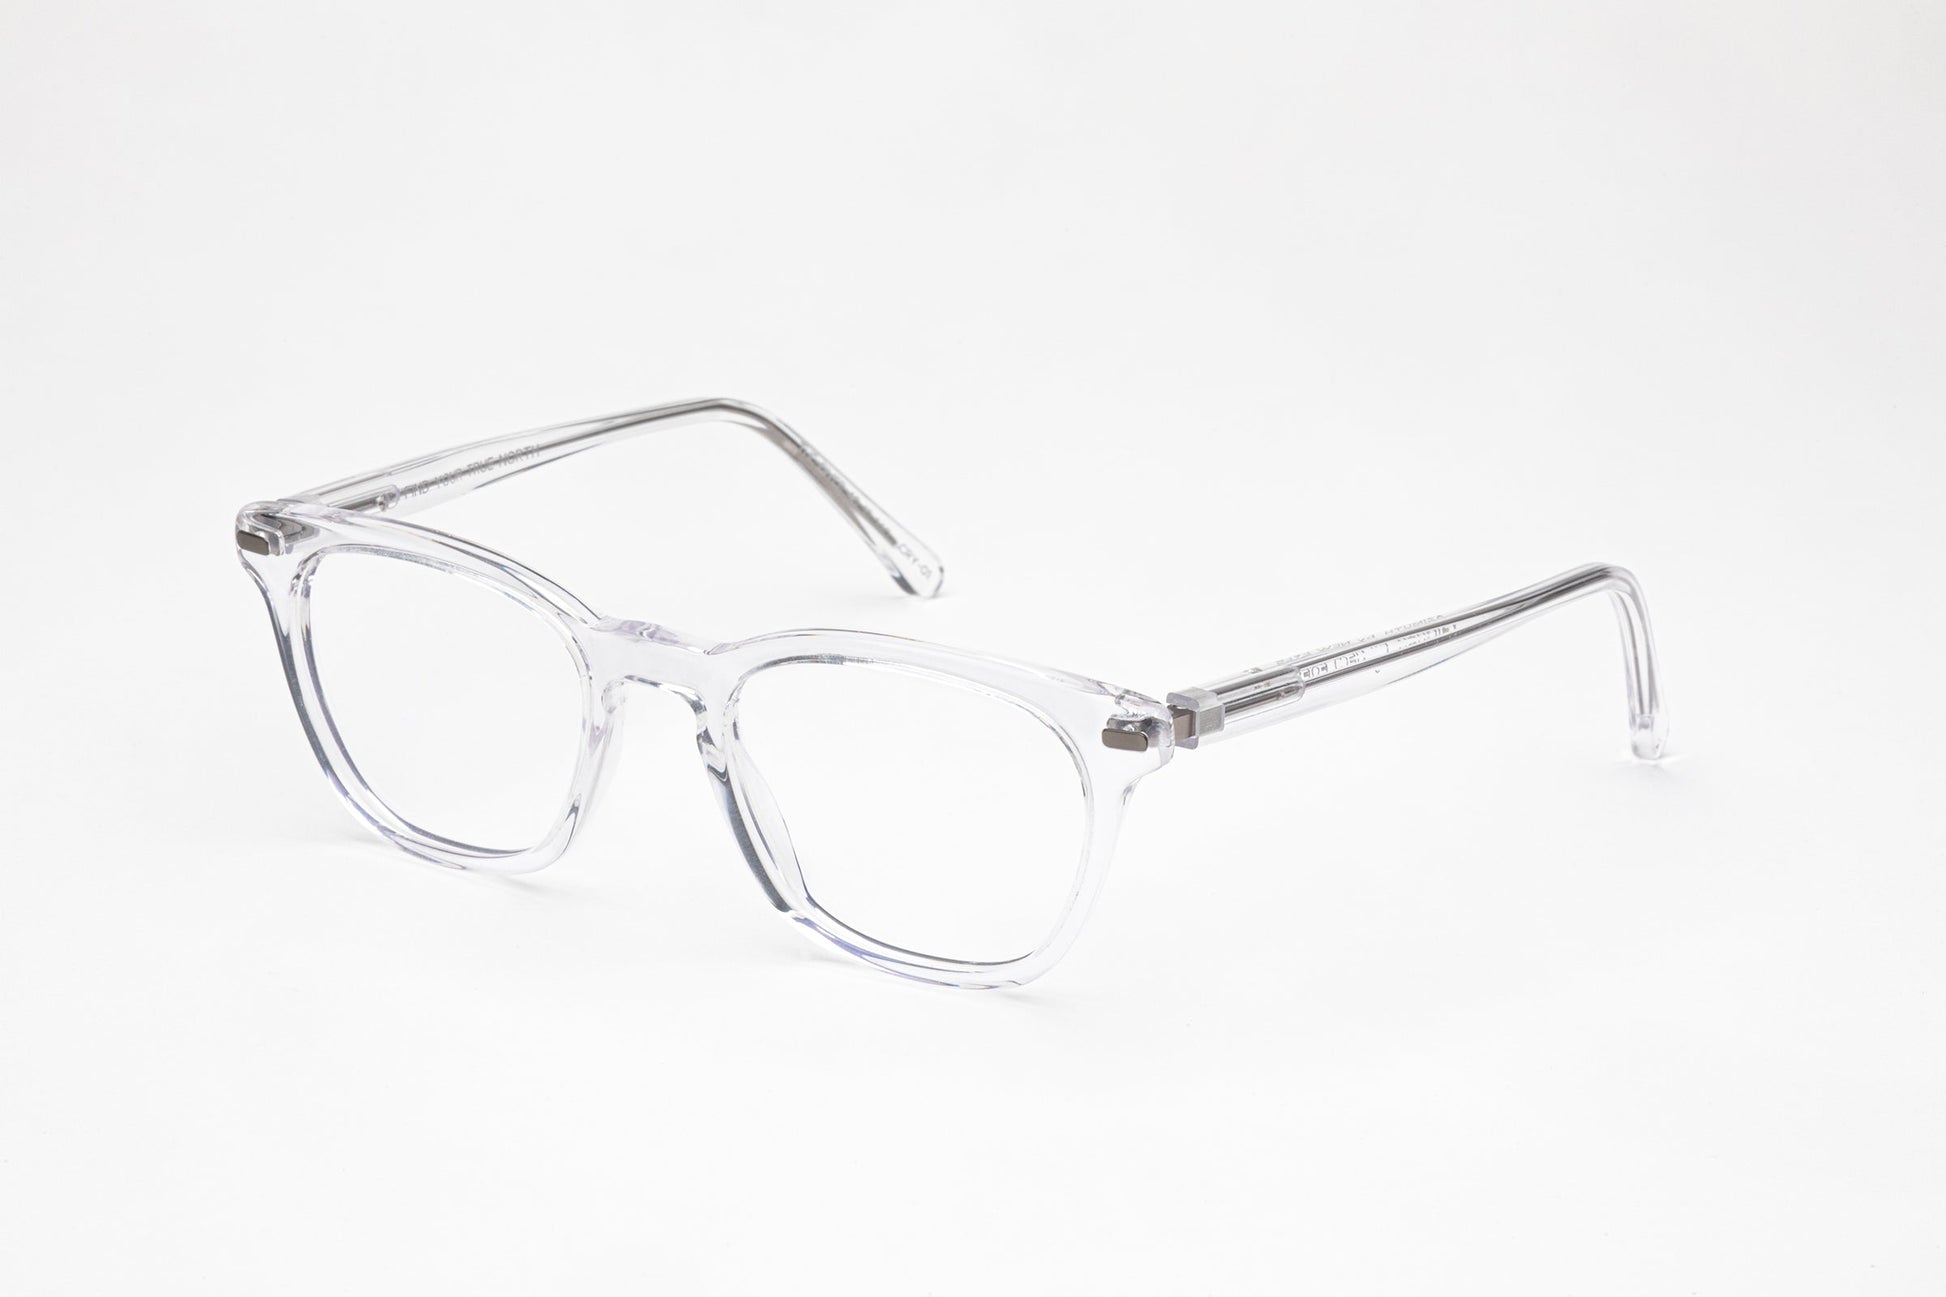 Angled View - The Giver 3 | Square Prescription Designer Glasses – Transparent Clear Frames 